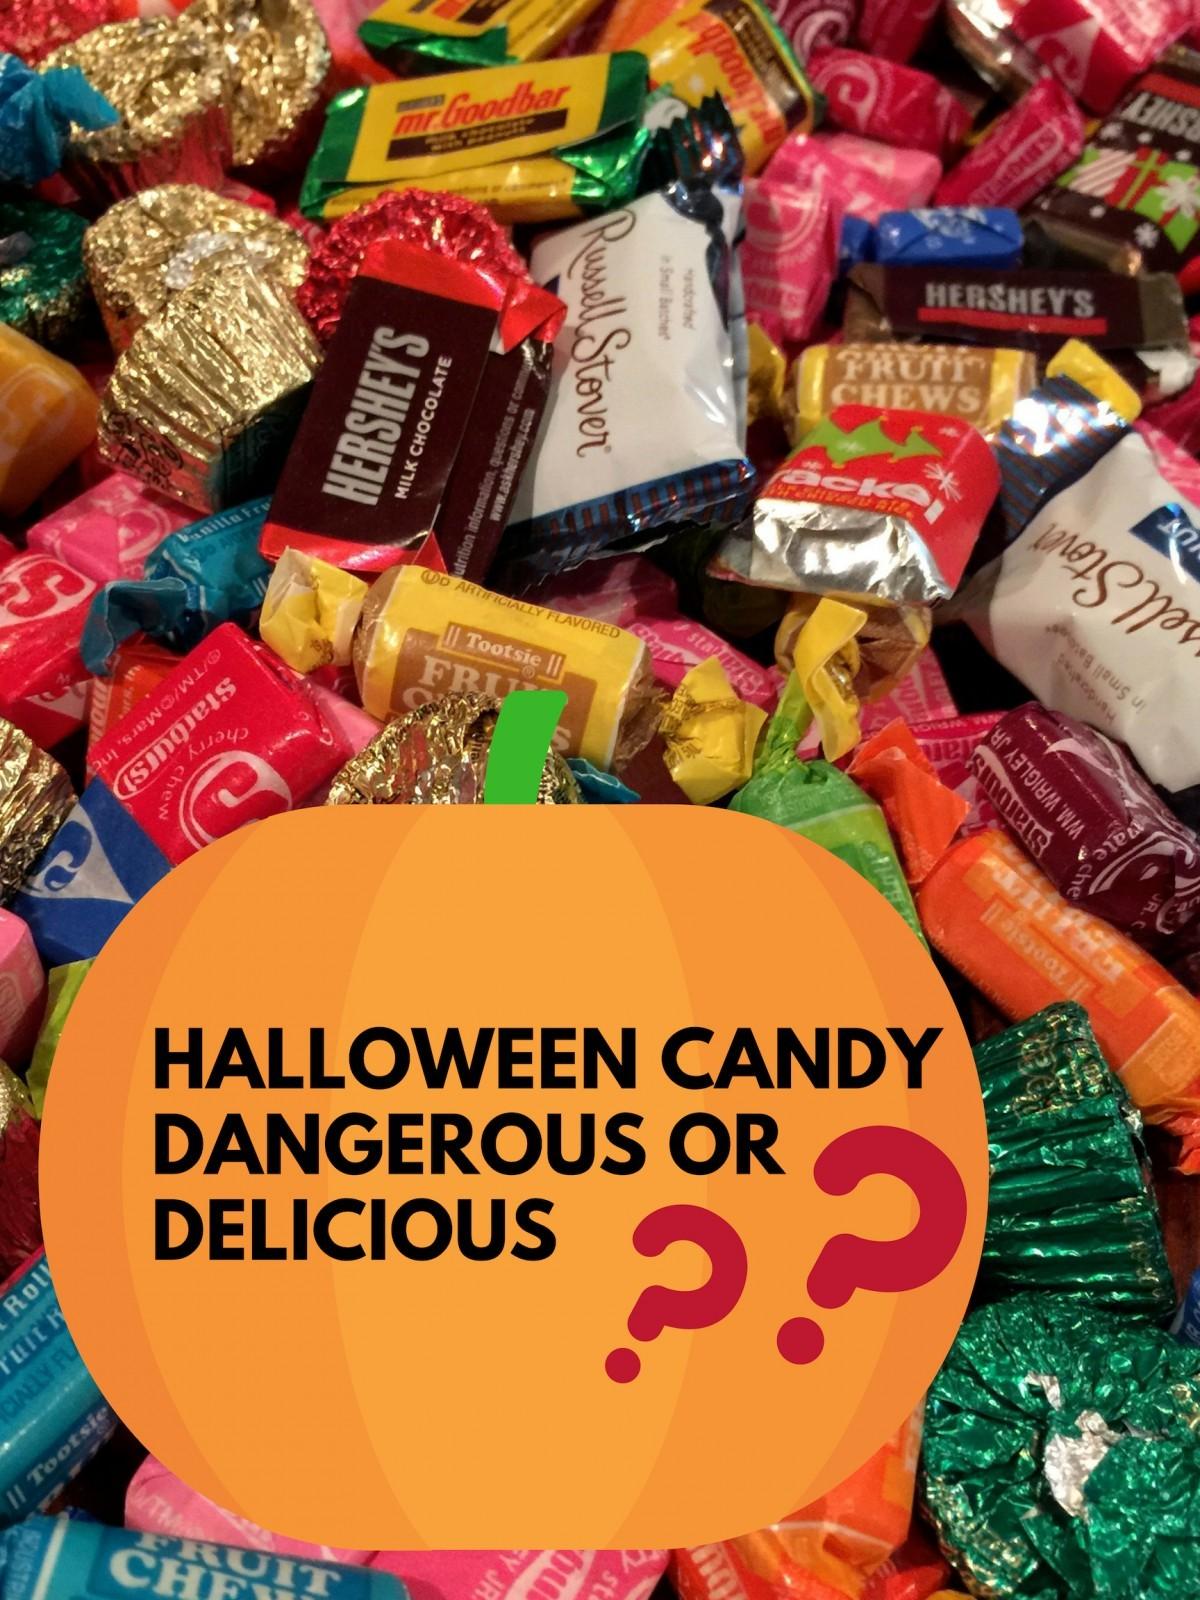 Wesleyan unwraps killer candy myth | The Rambler